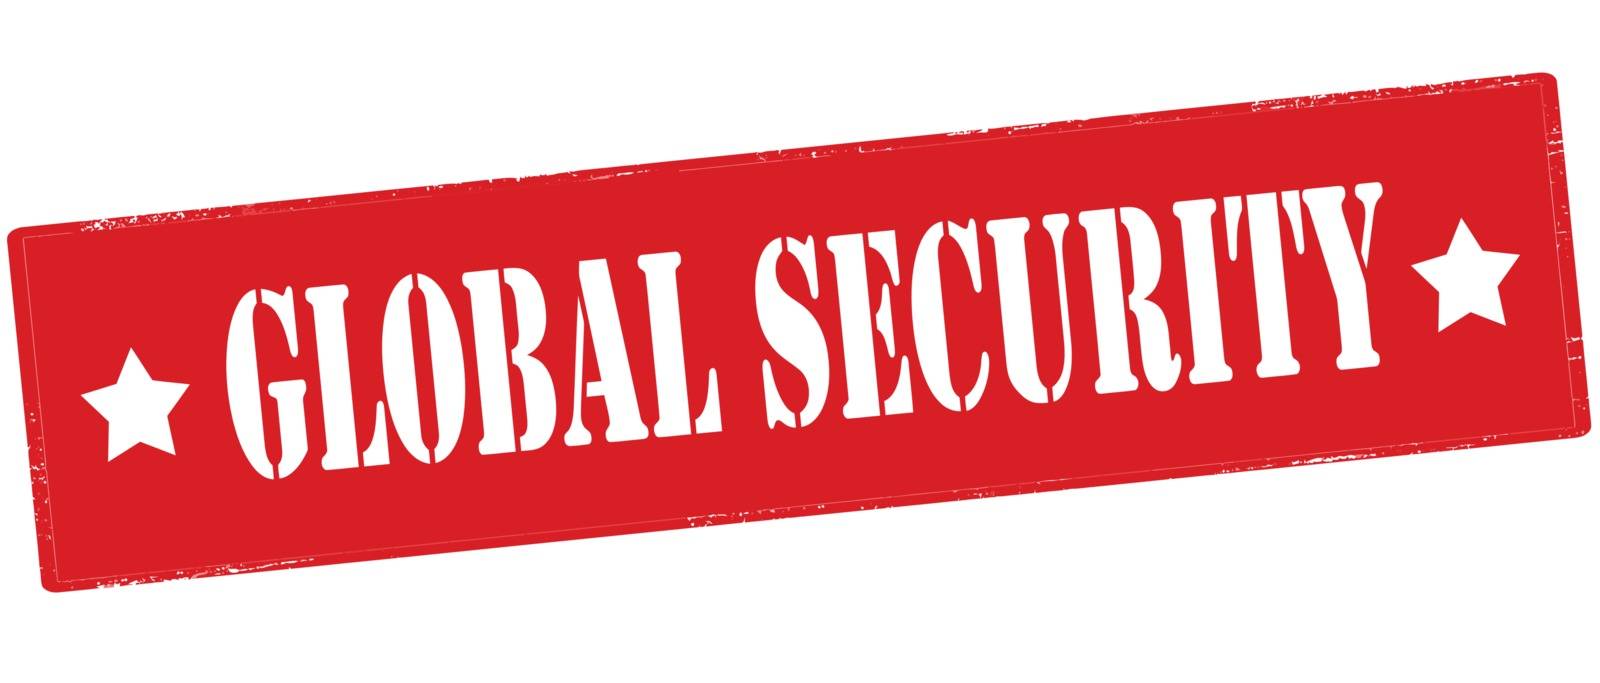 Global security by carmenbobo